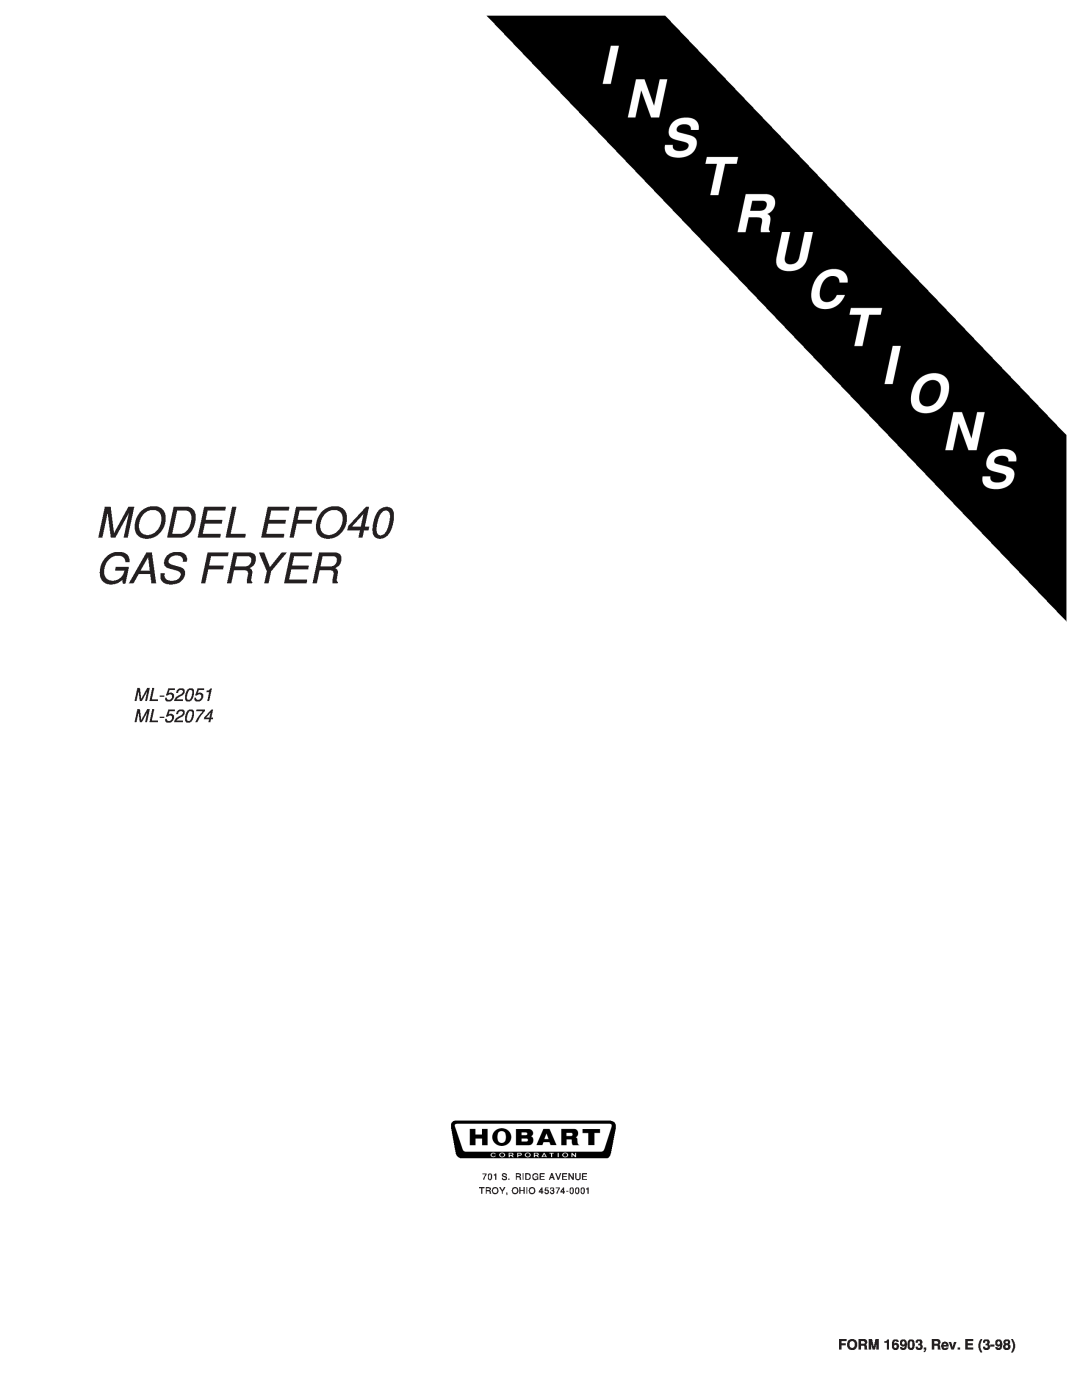 Hobart manual MODEL EFO40 GAS FRYER, ML-52051 ML-52074, FORM 16903, Rev. E, 701 S. RIDGE AVENUE TROY, OHIO 